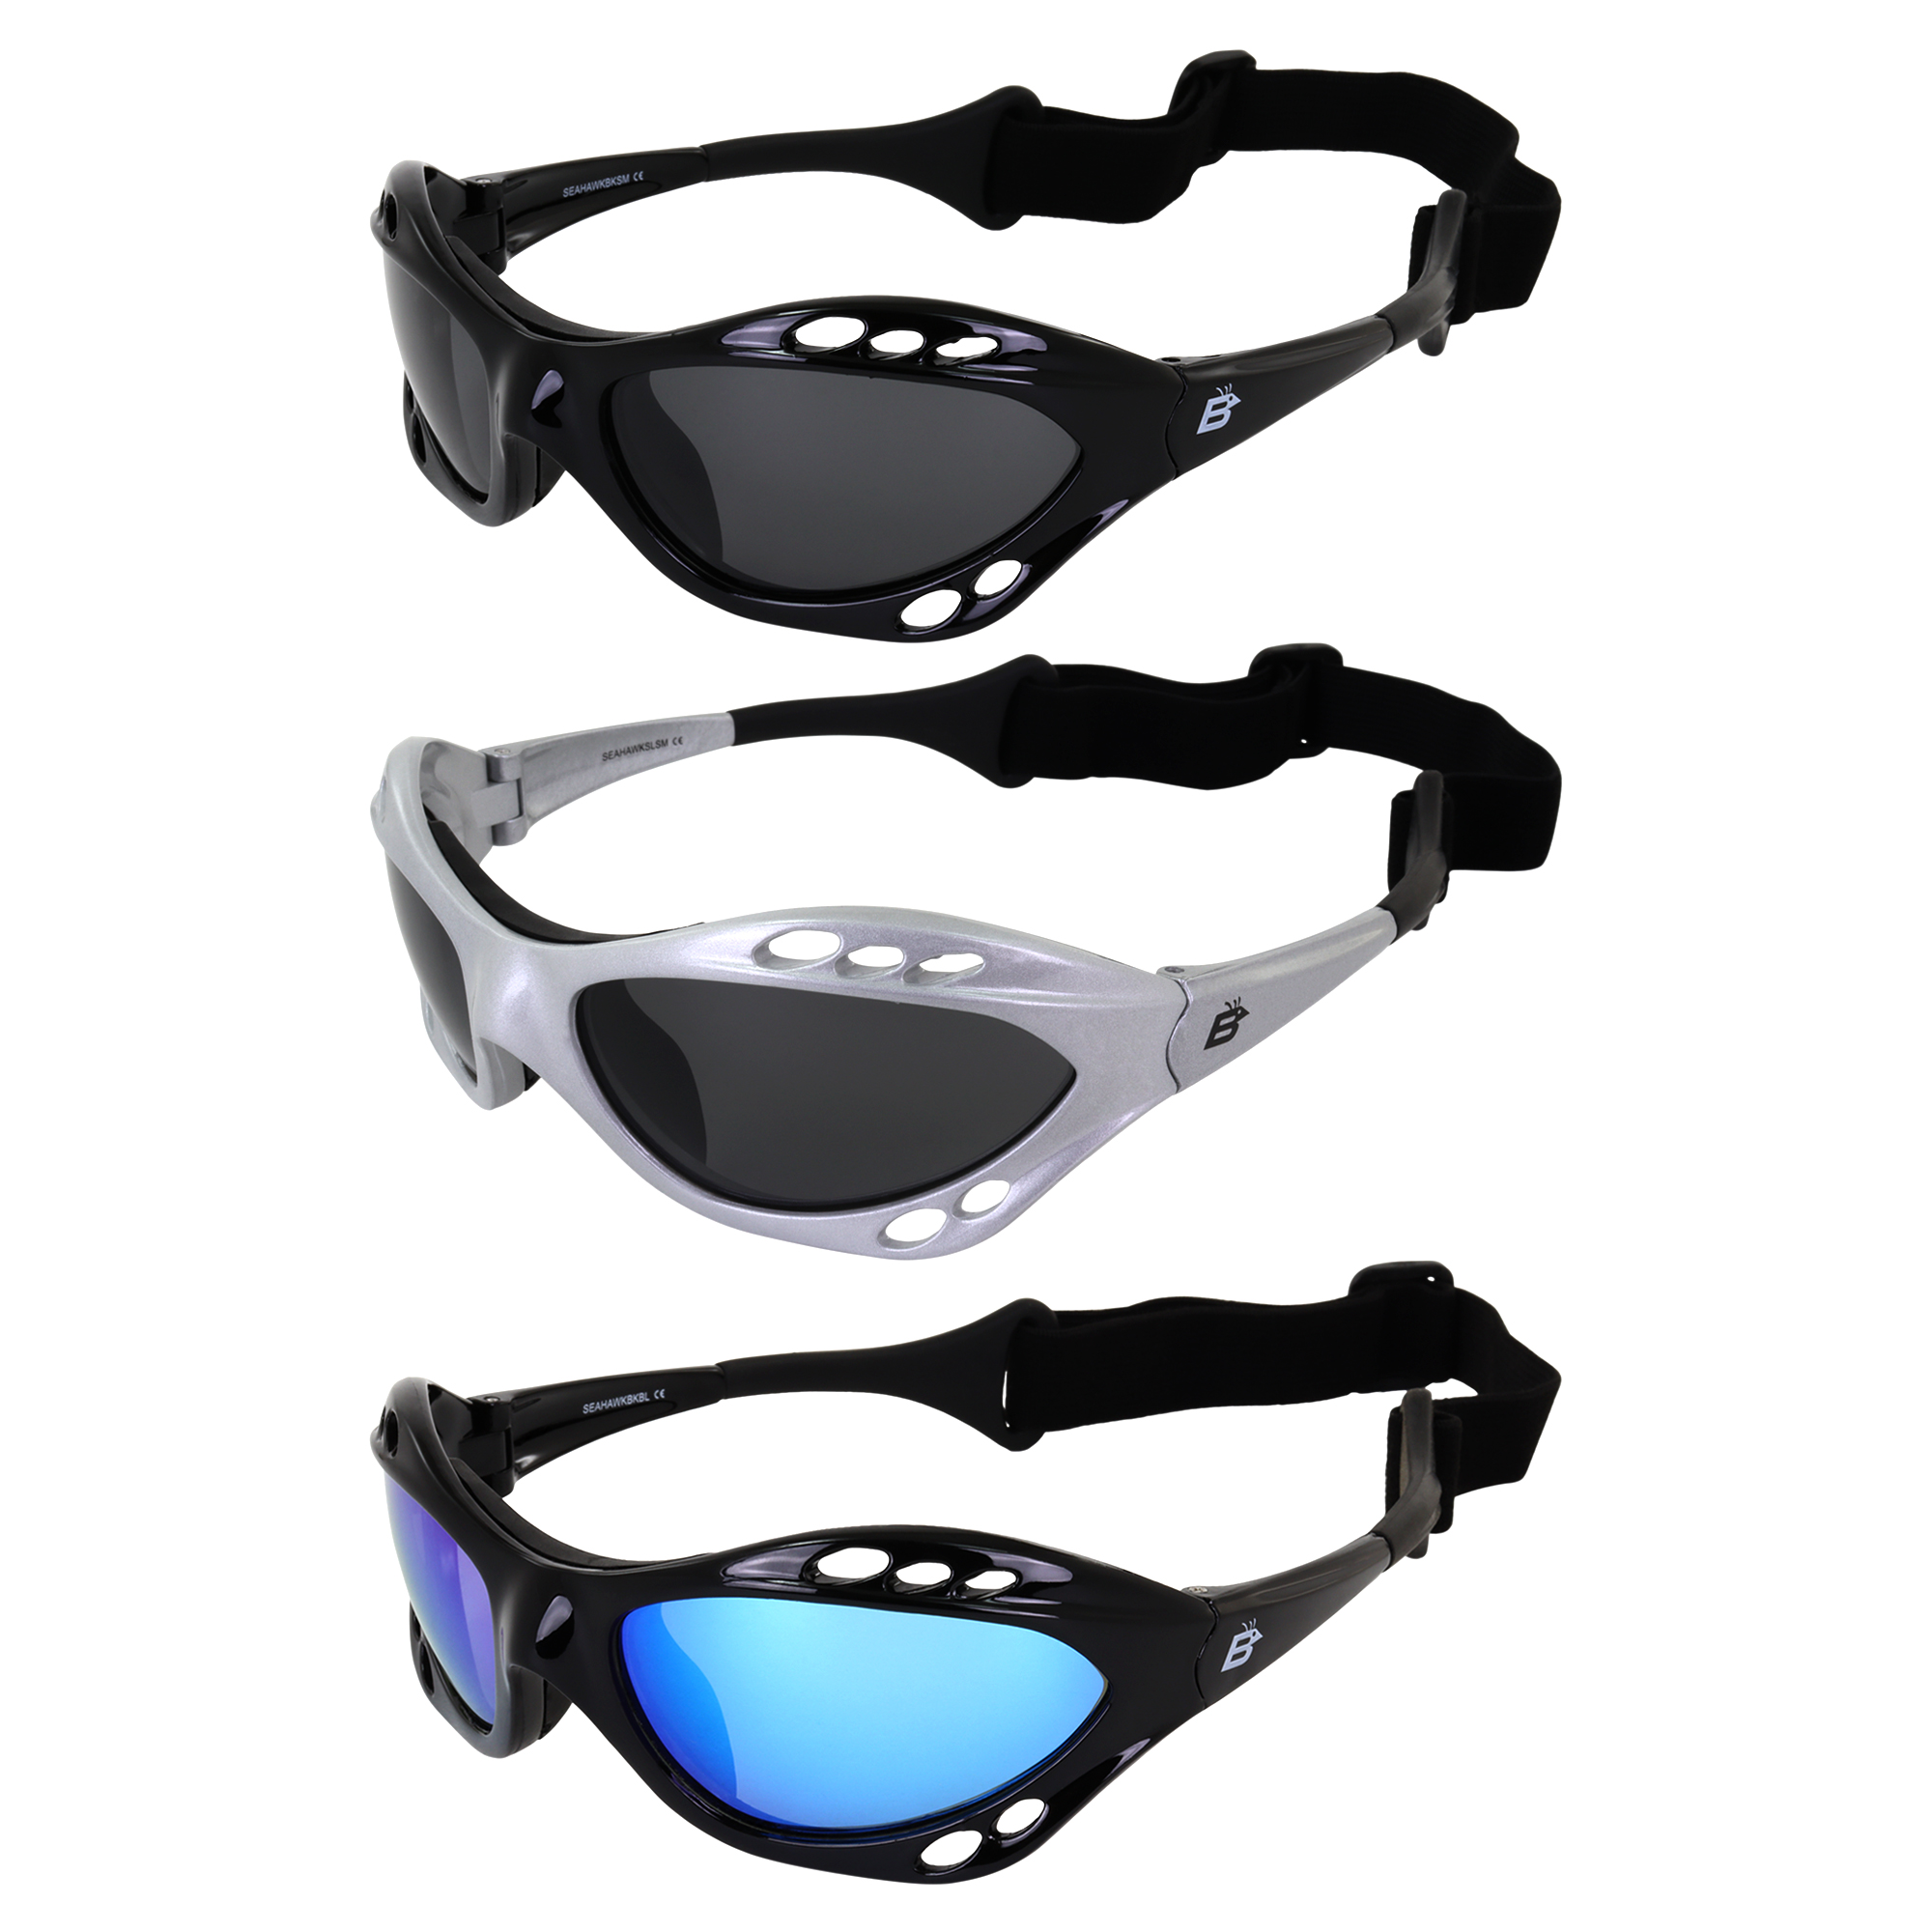 Three Pair Birdz Seahawk Polarized Sunglasses Floating Jet Ski Goggles Sport Kite-Boarding, Surfing, Kayaking, Two Smoke, One Blue Mirror Lens - image 1 of 4